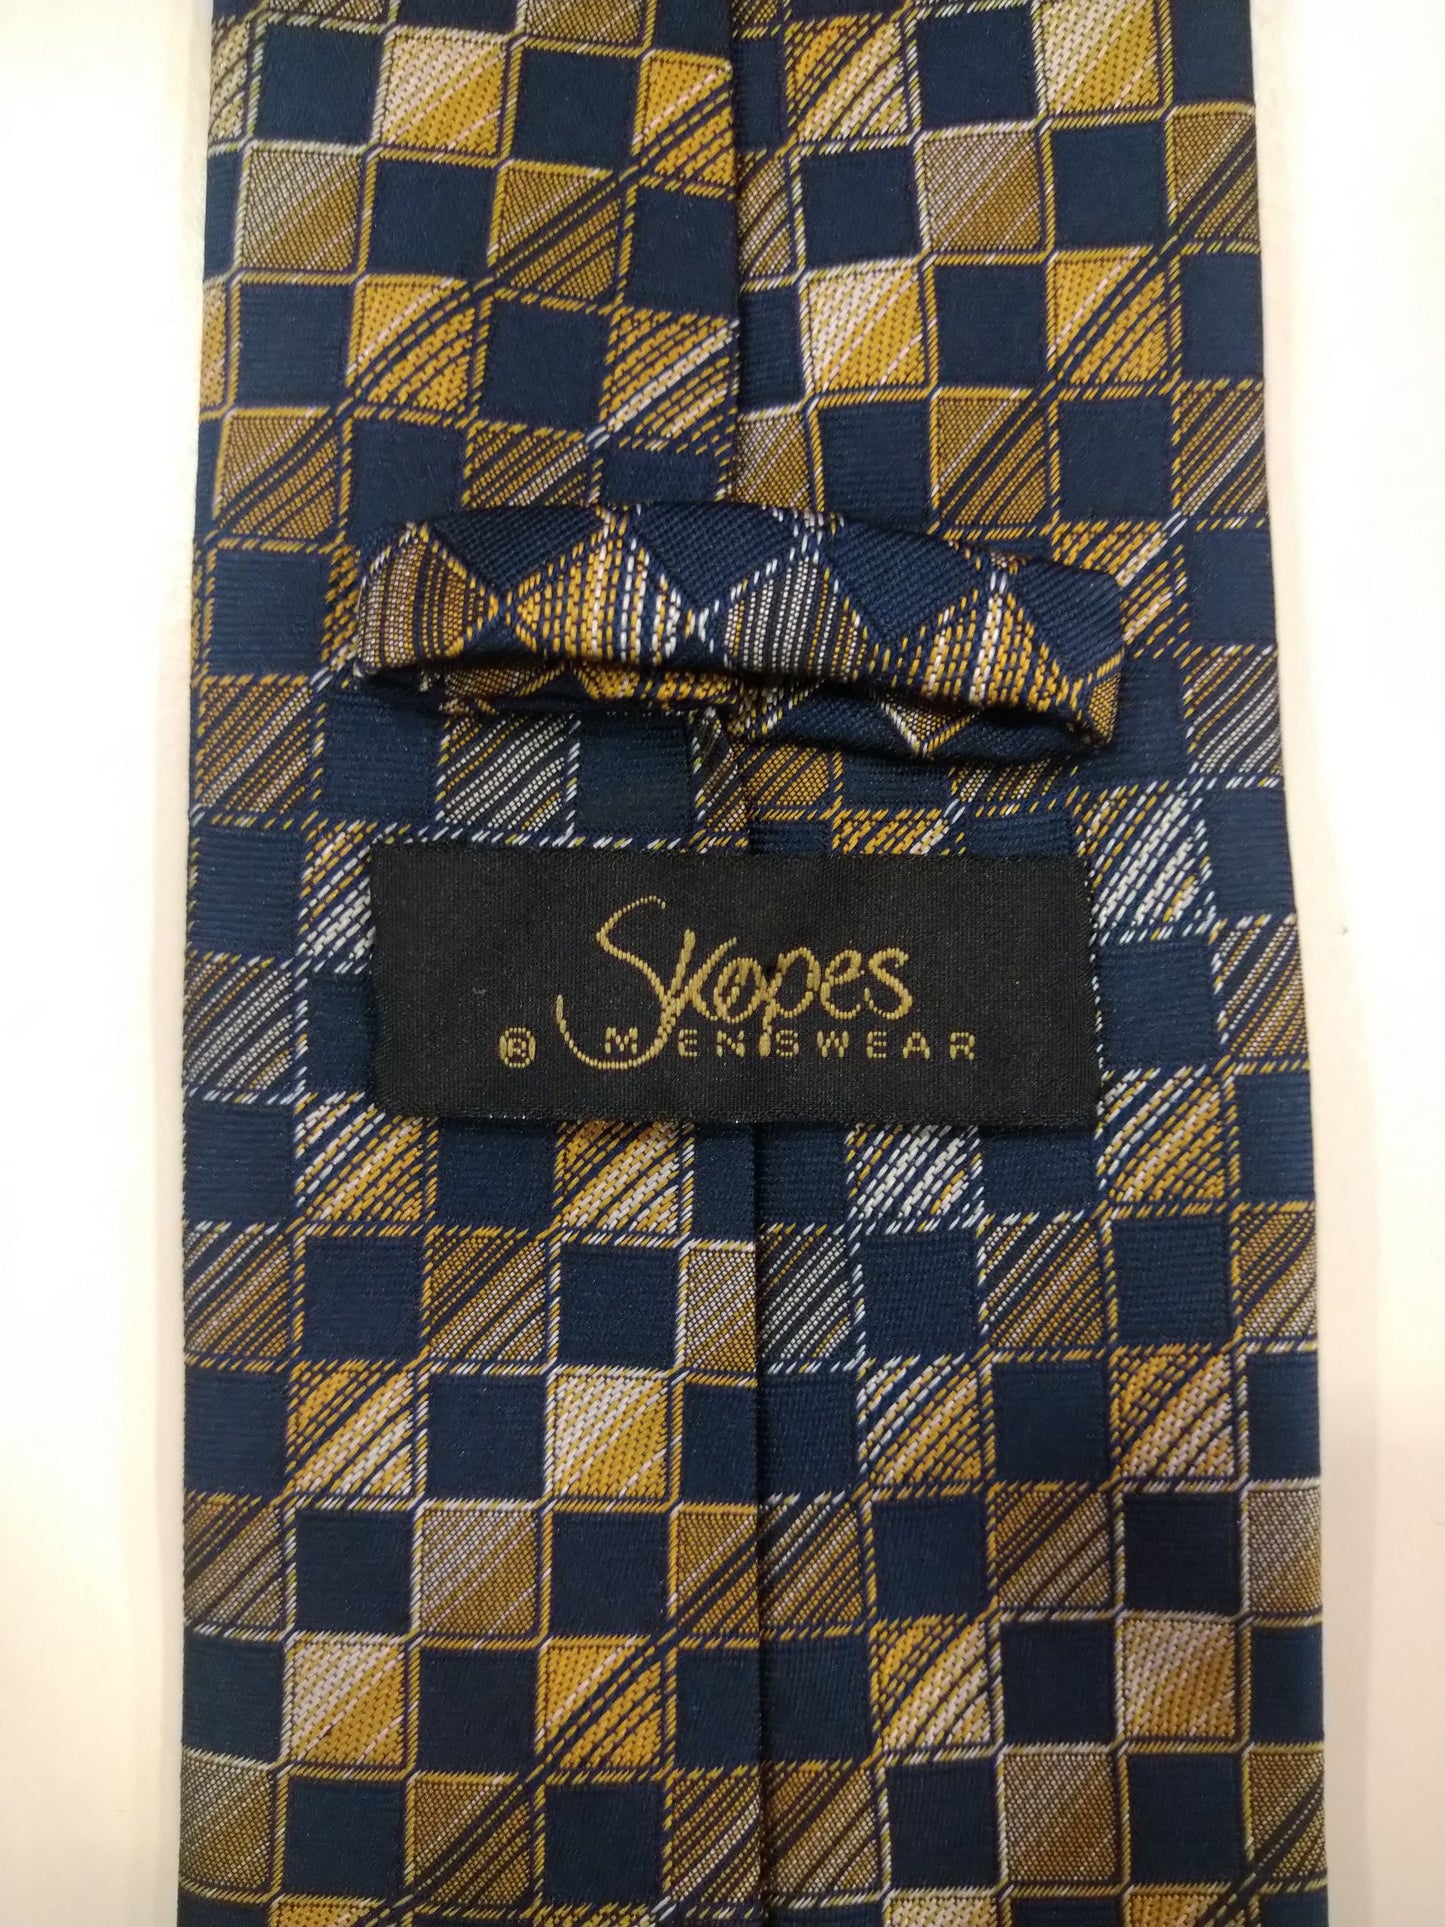 Skopes Polyester la corbata. Motín amarillo gris azul separado.